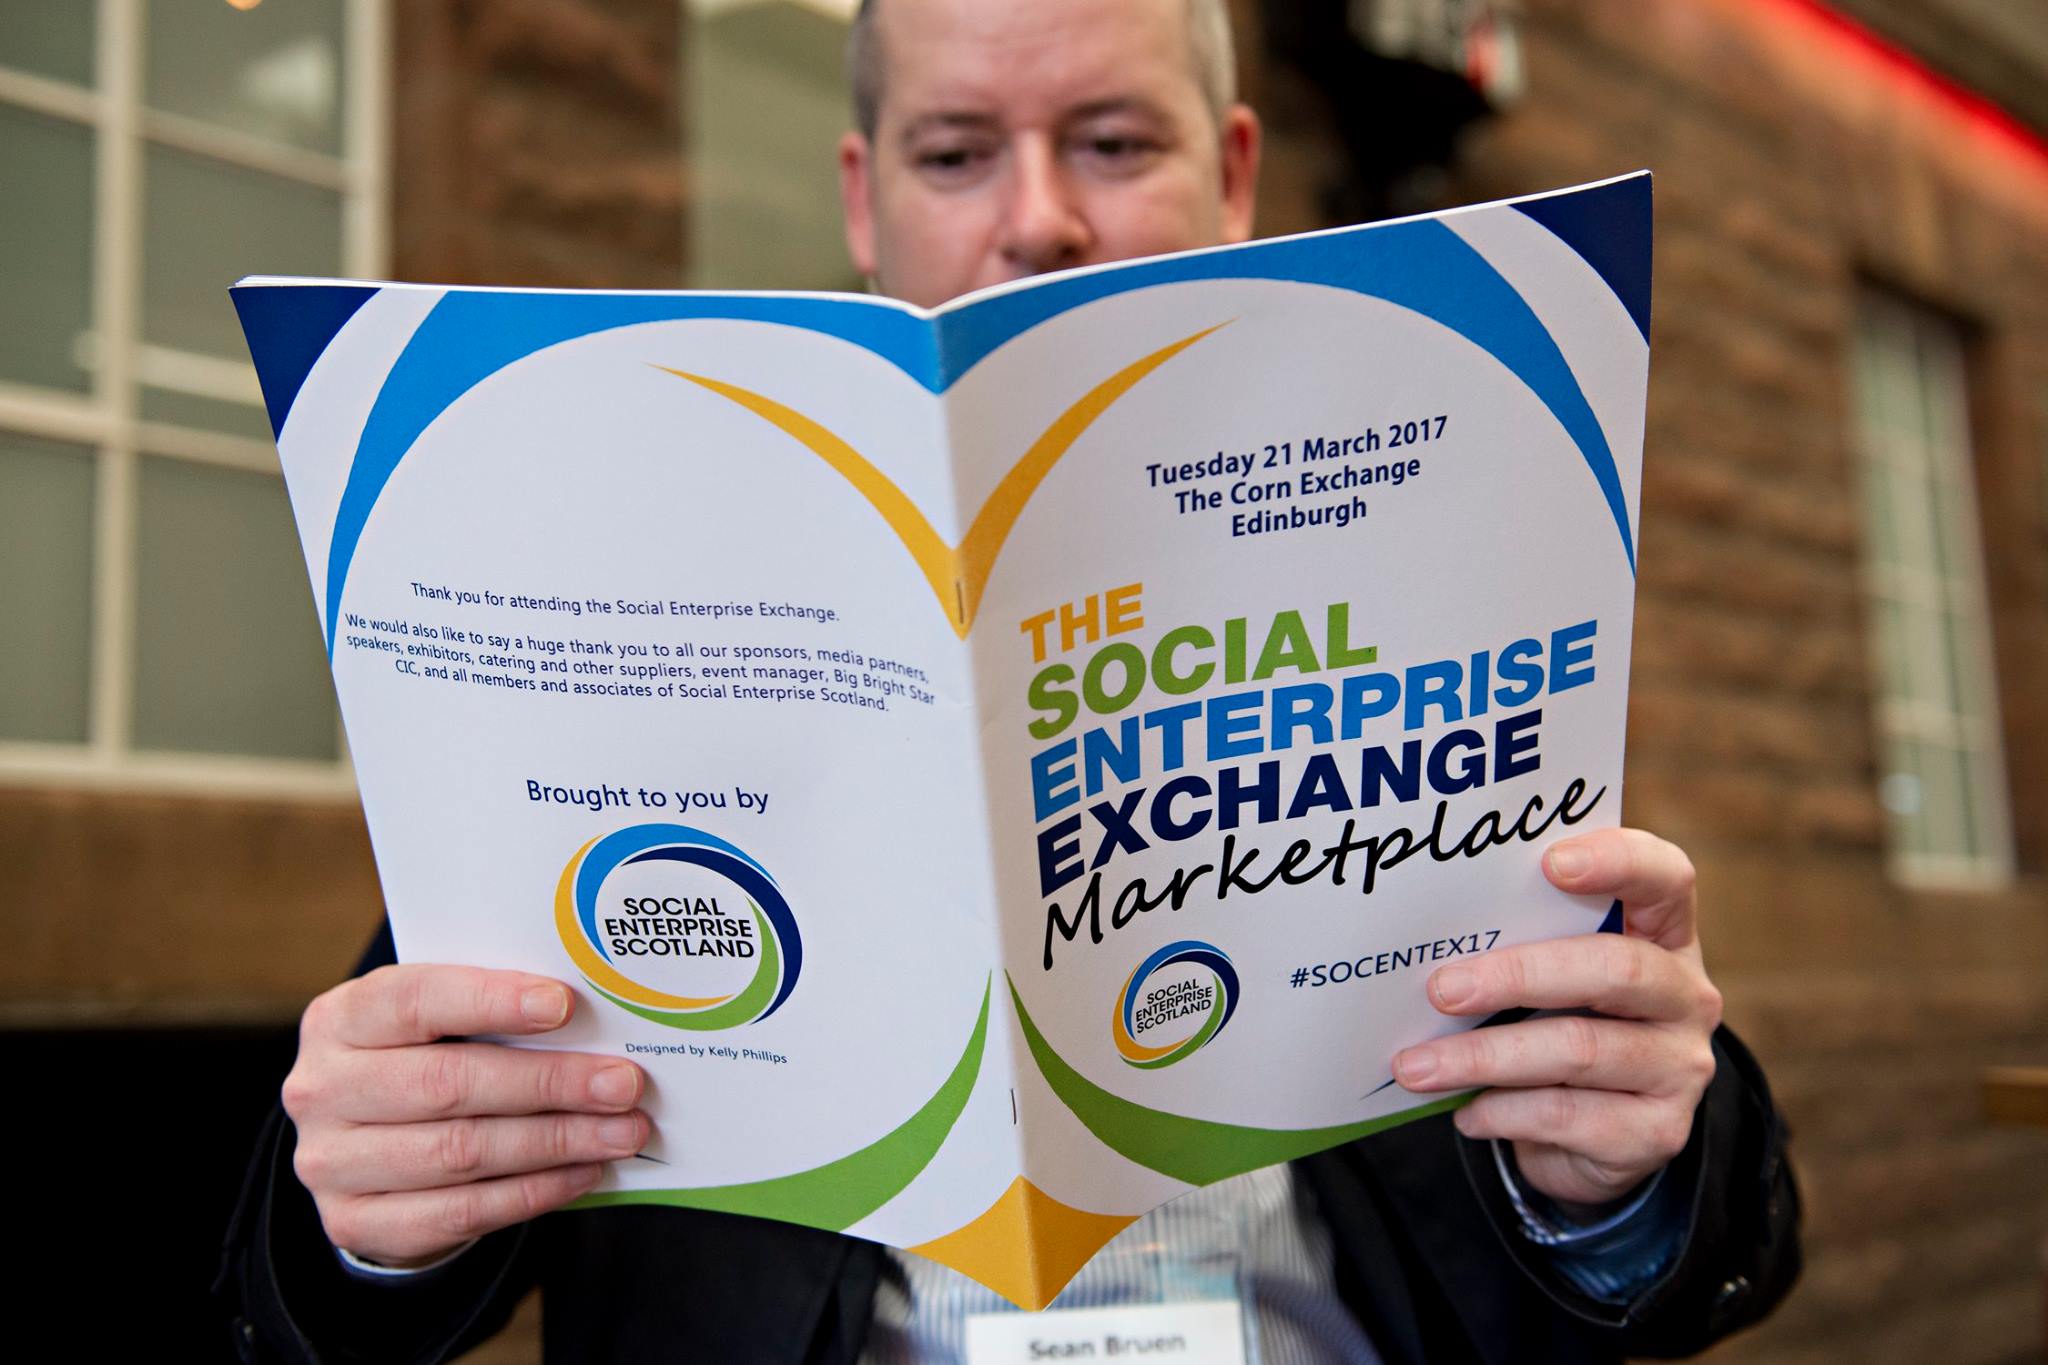 Social Enterprise Exchange Marketplace in Edinburgh